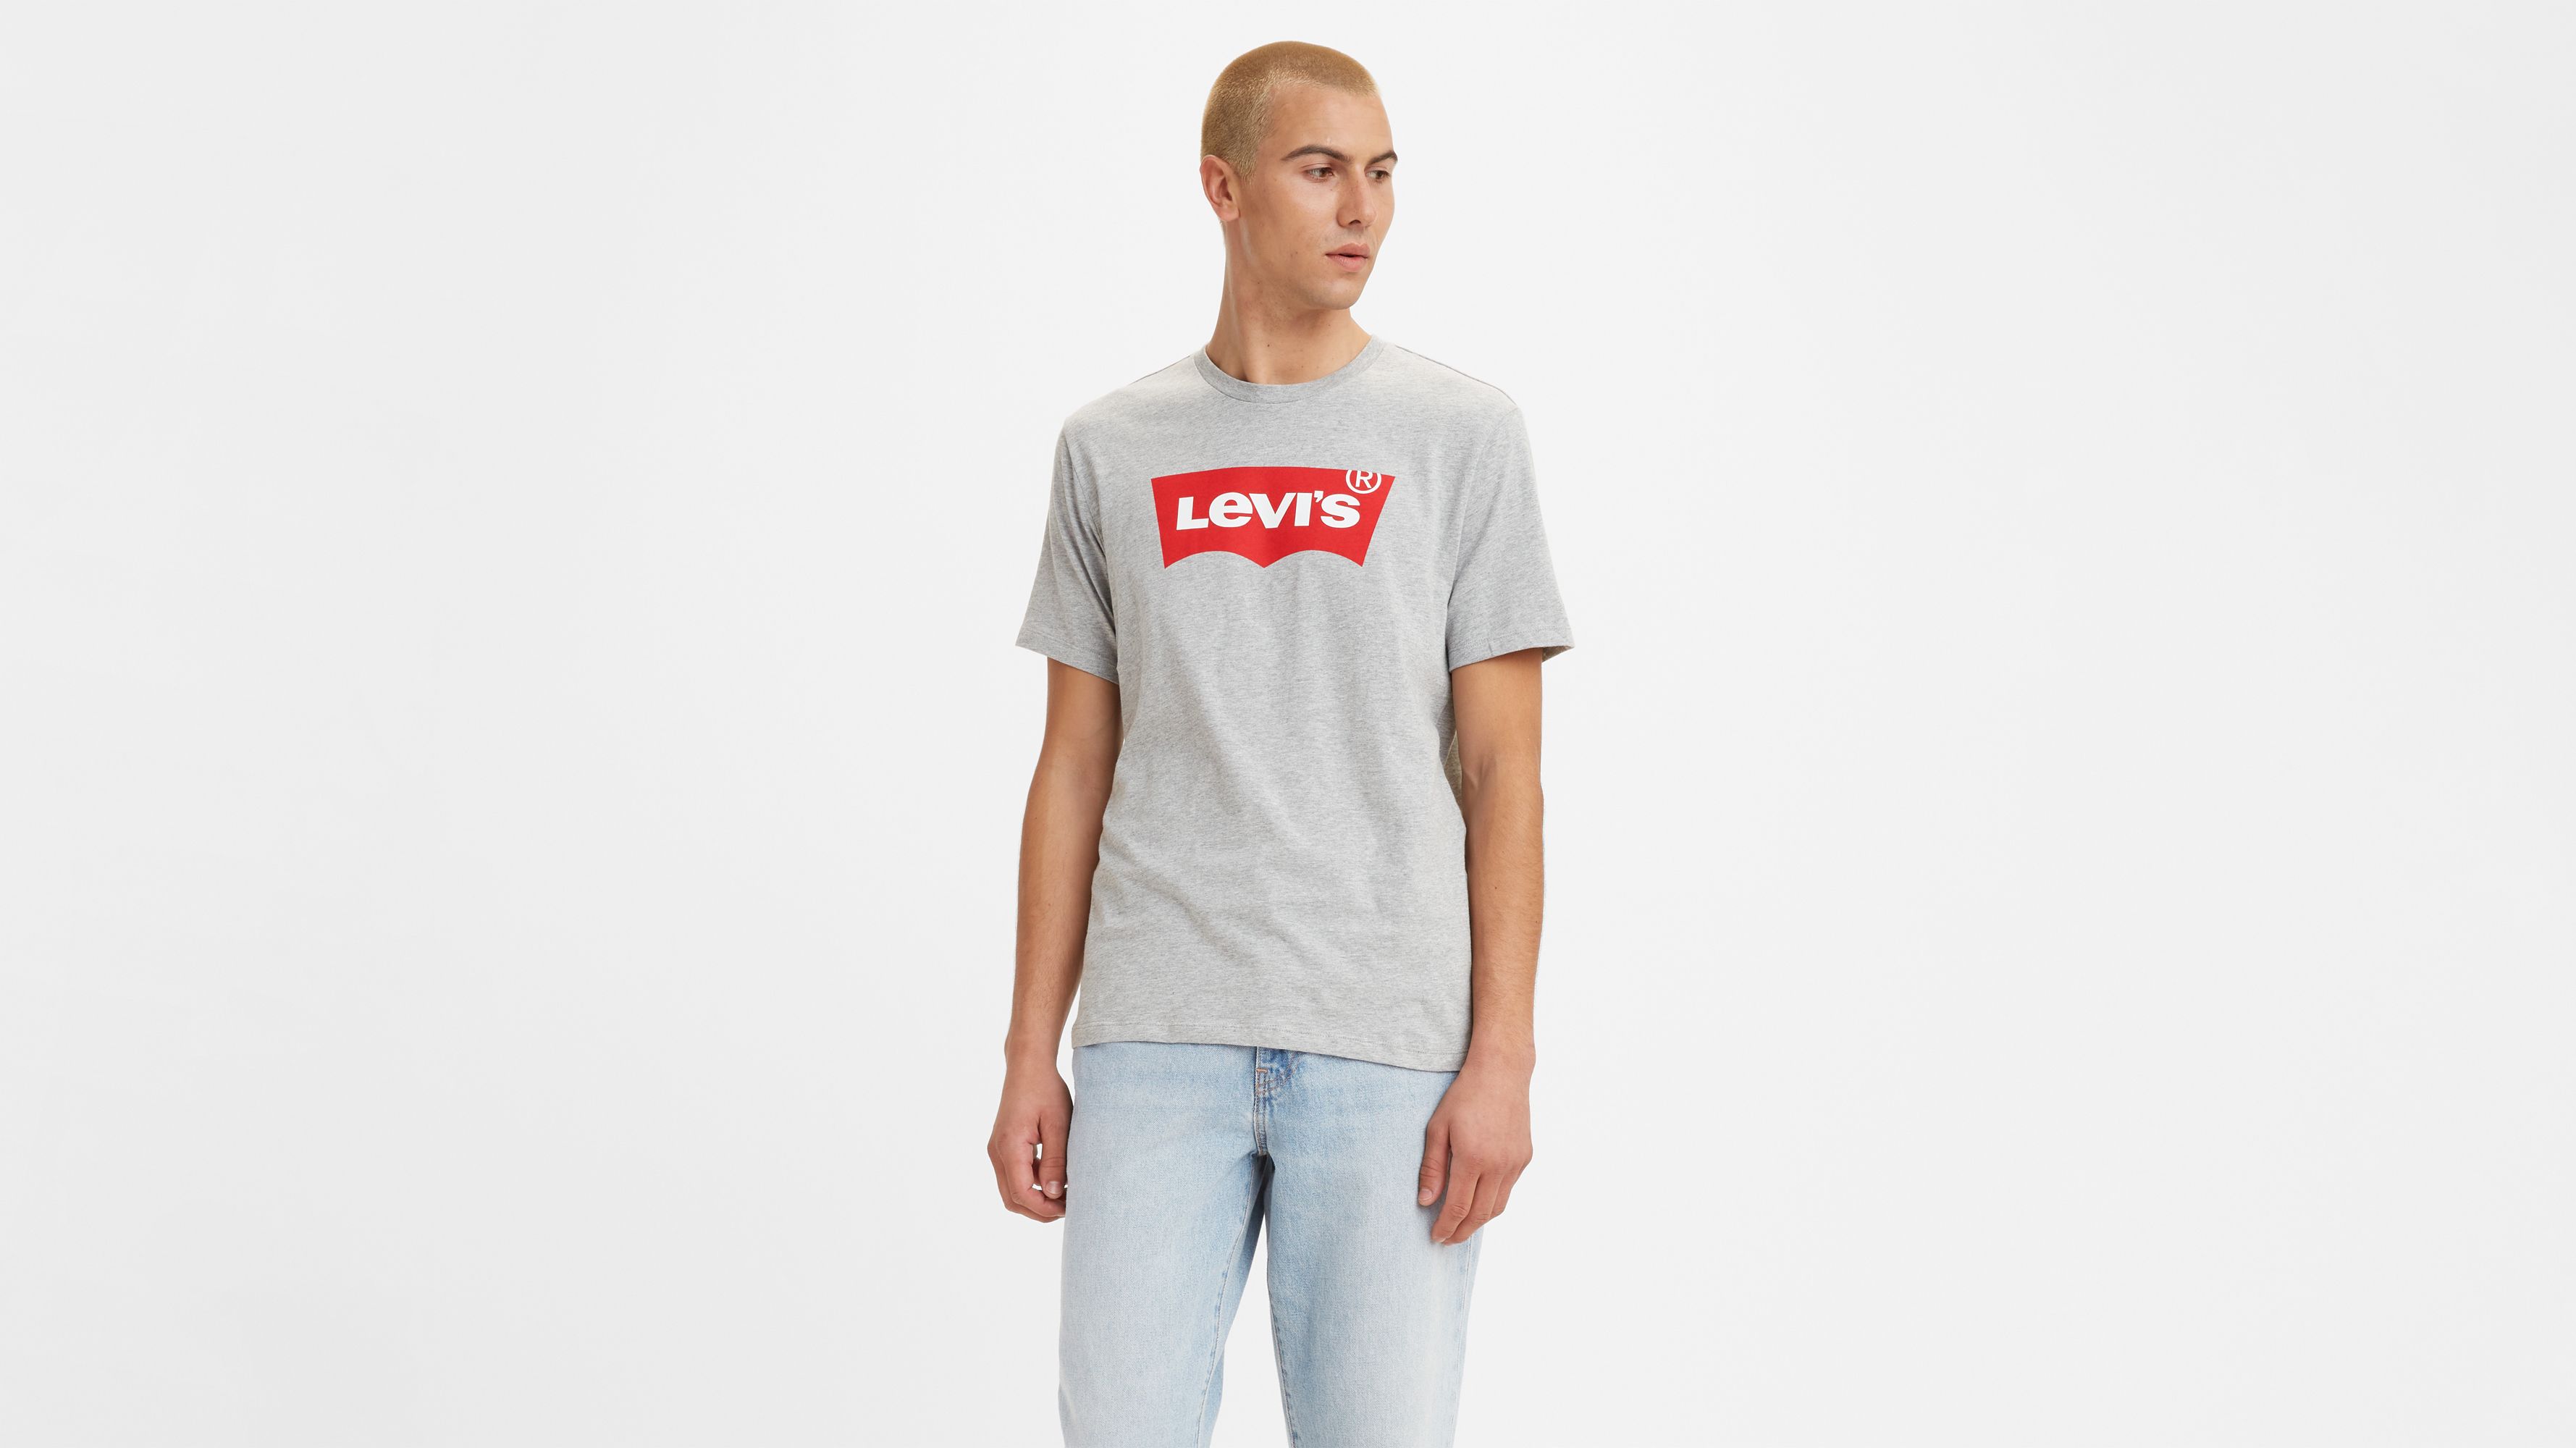 levi's shirts